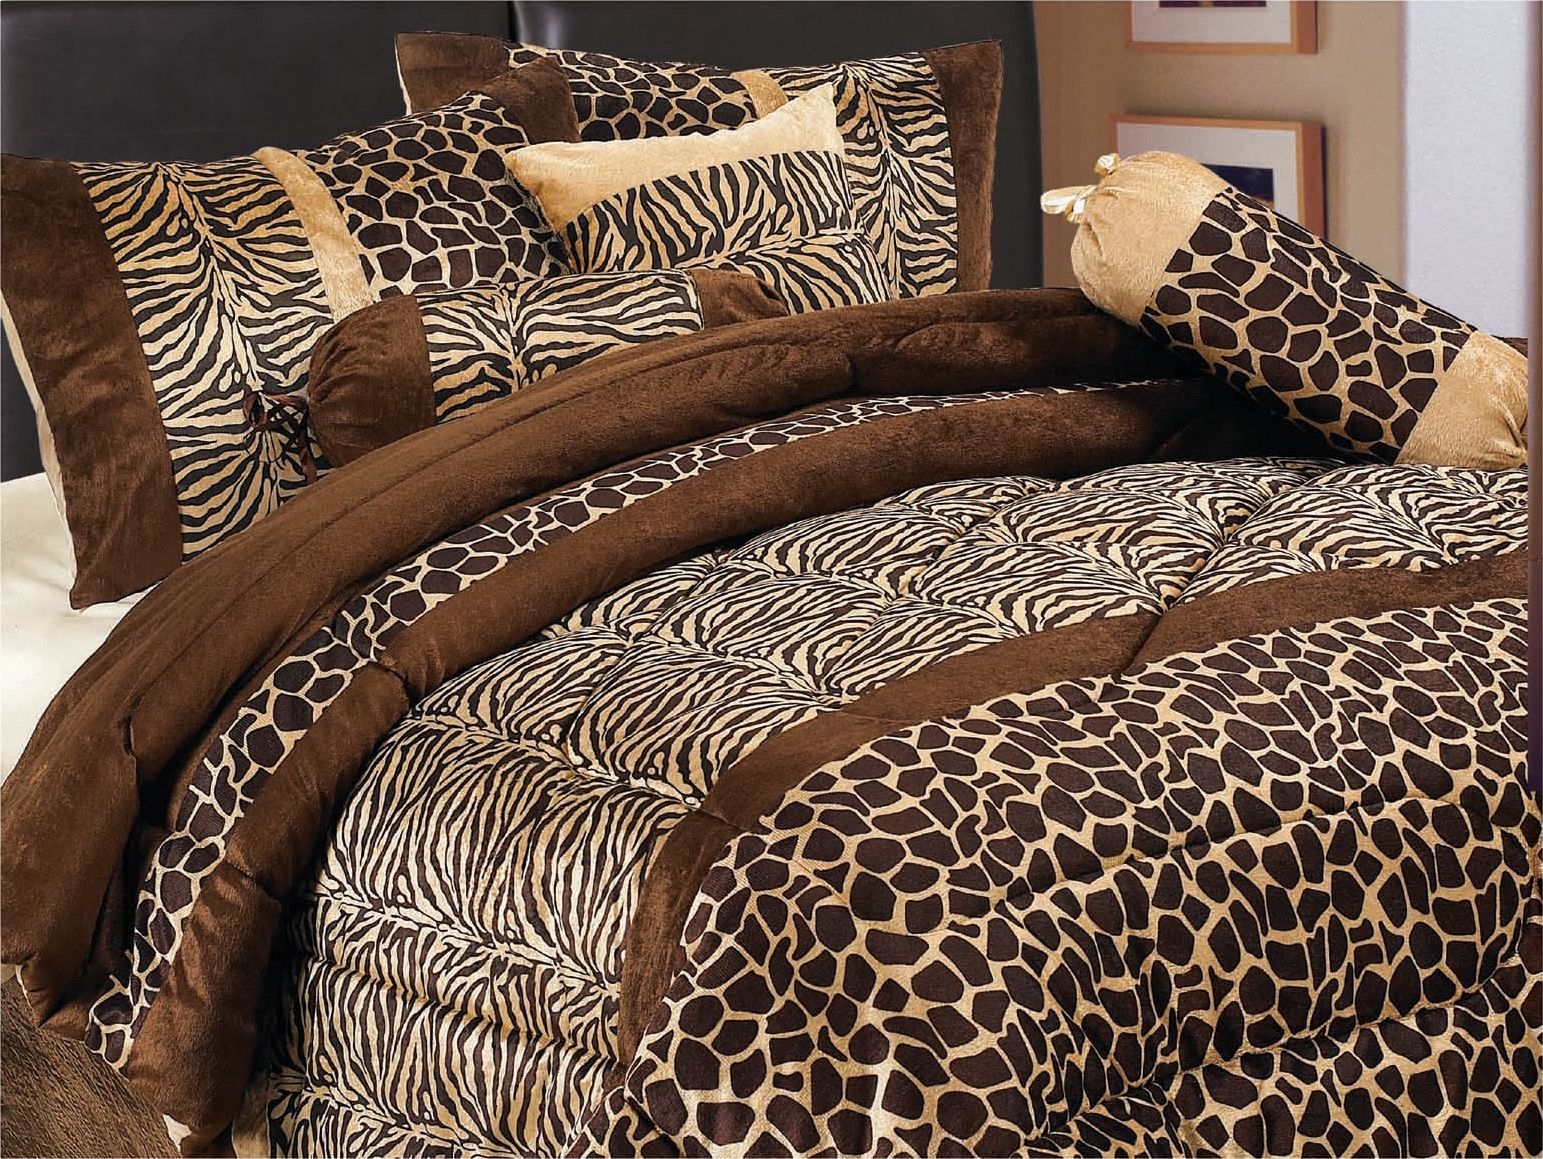 Satin Sheet Set KING Size Leopard Print Animal Safari Luxury Silk Feel Bedding 